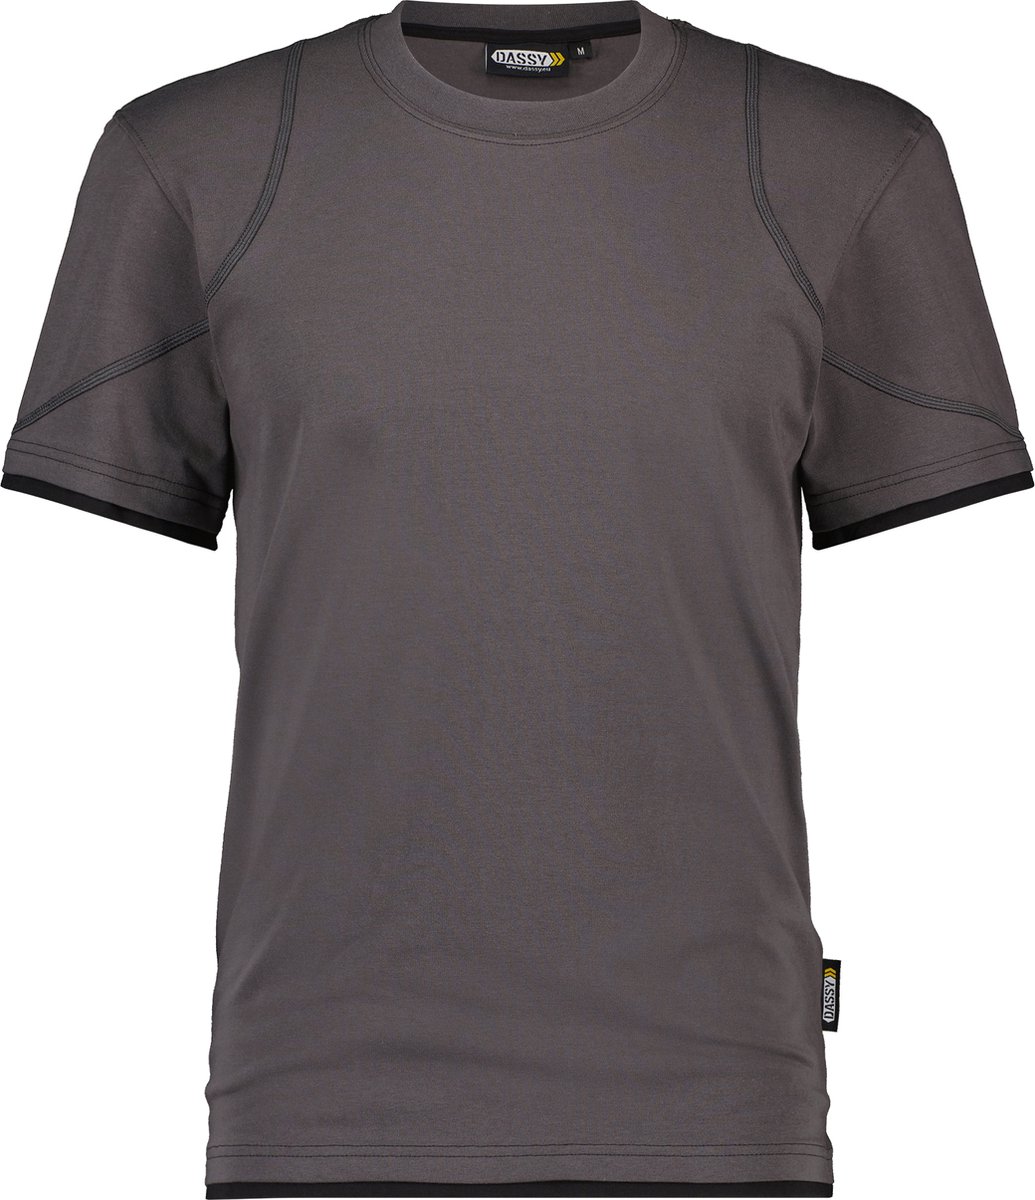 DASSY® Kinetic T-shirt - maat XL - ANTRACIETGRIJS/ZWART